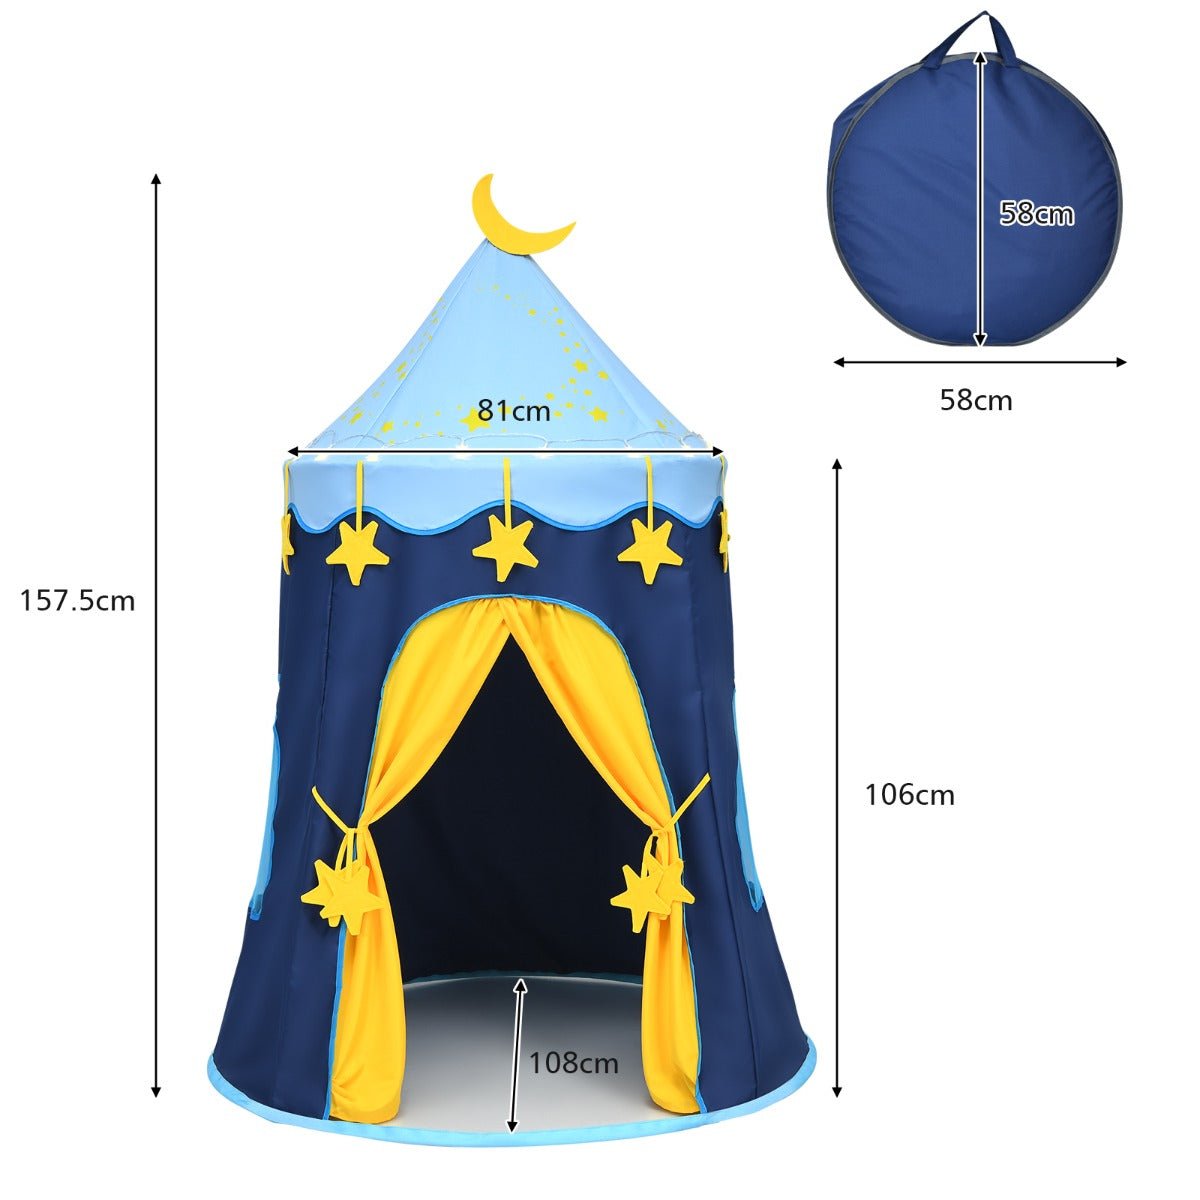 Adventure Awaits: Kids Foldable Play Tent with Star Lights & Bag